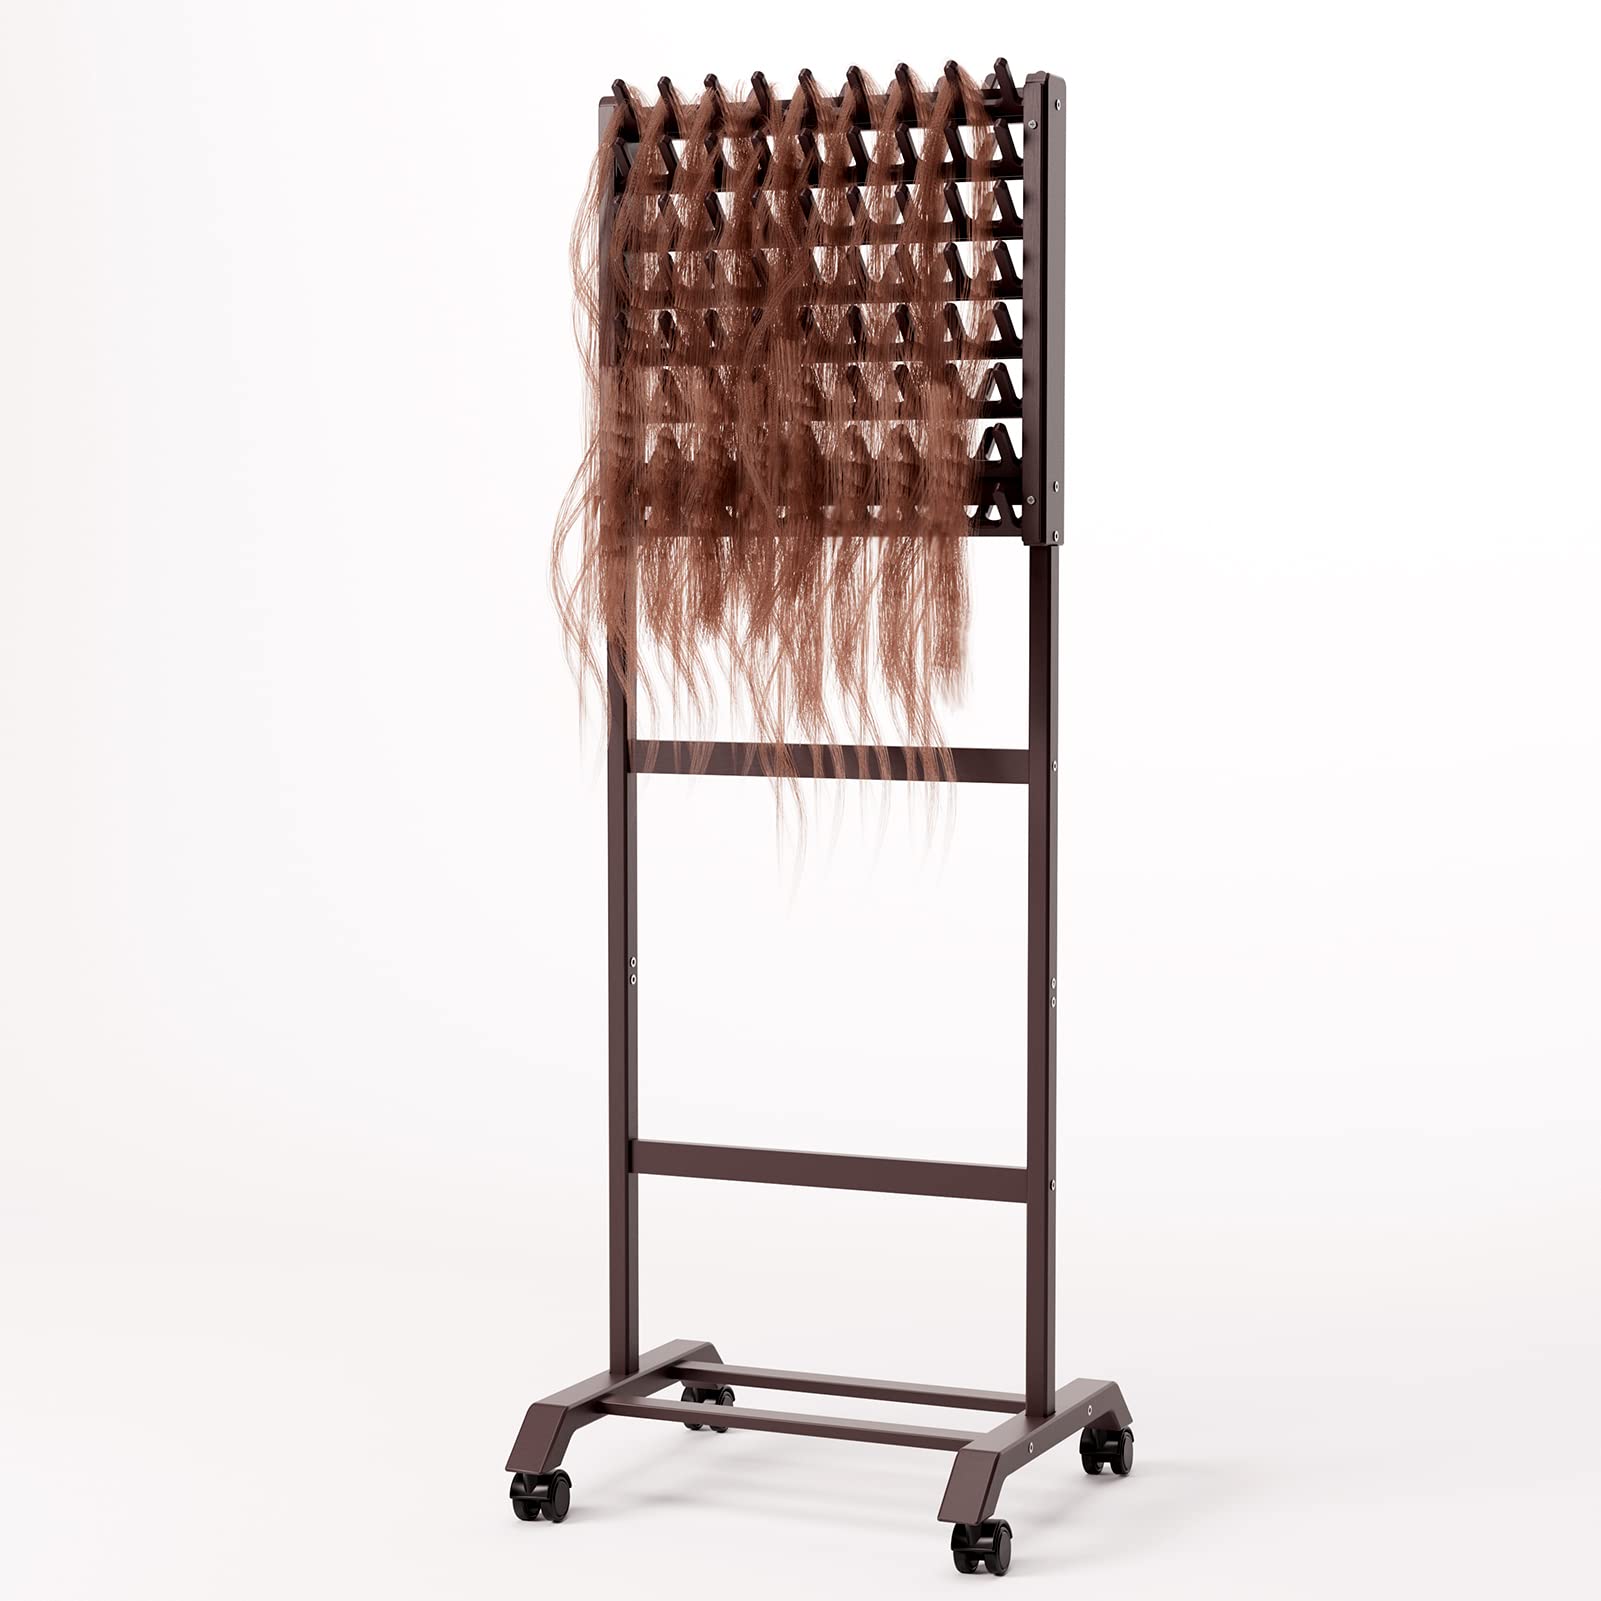 Yumkfoi Braiding Hair Rack with Sawtooth Pegs, 144 Pegs Wooden Braid Rack  for Hair Braiding, 2 Sided Standing Hair Stand with Wheels, Hair Separator